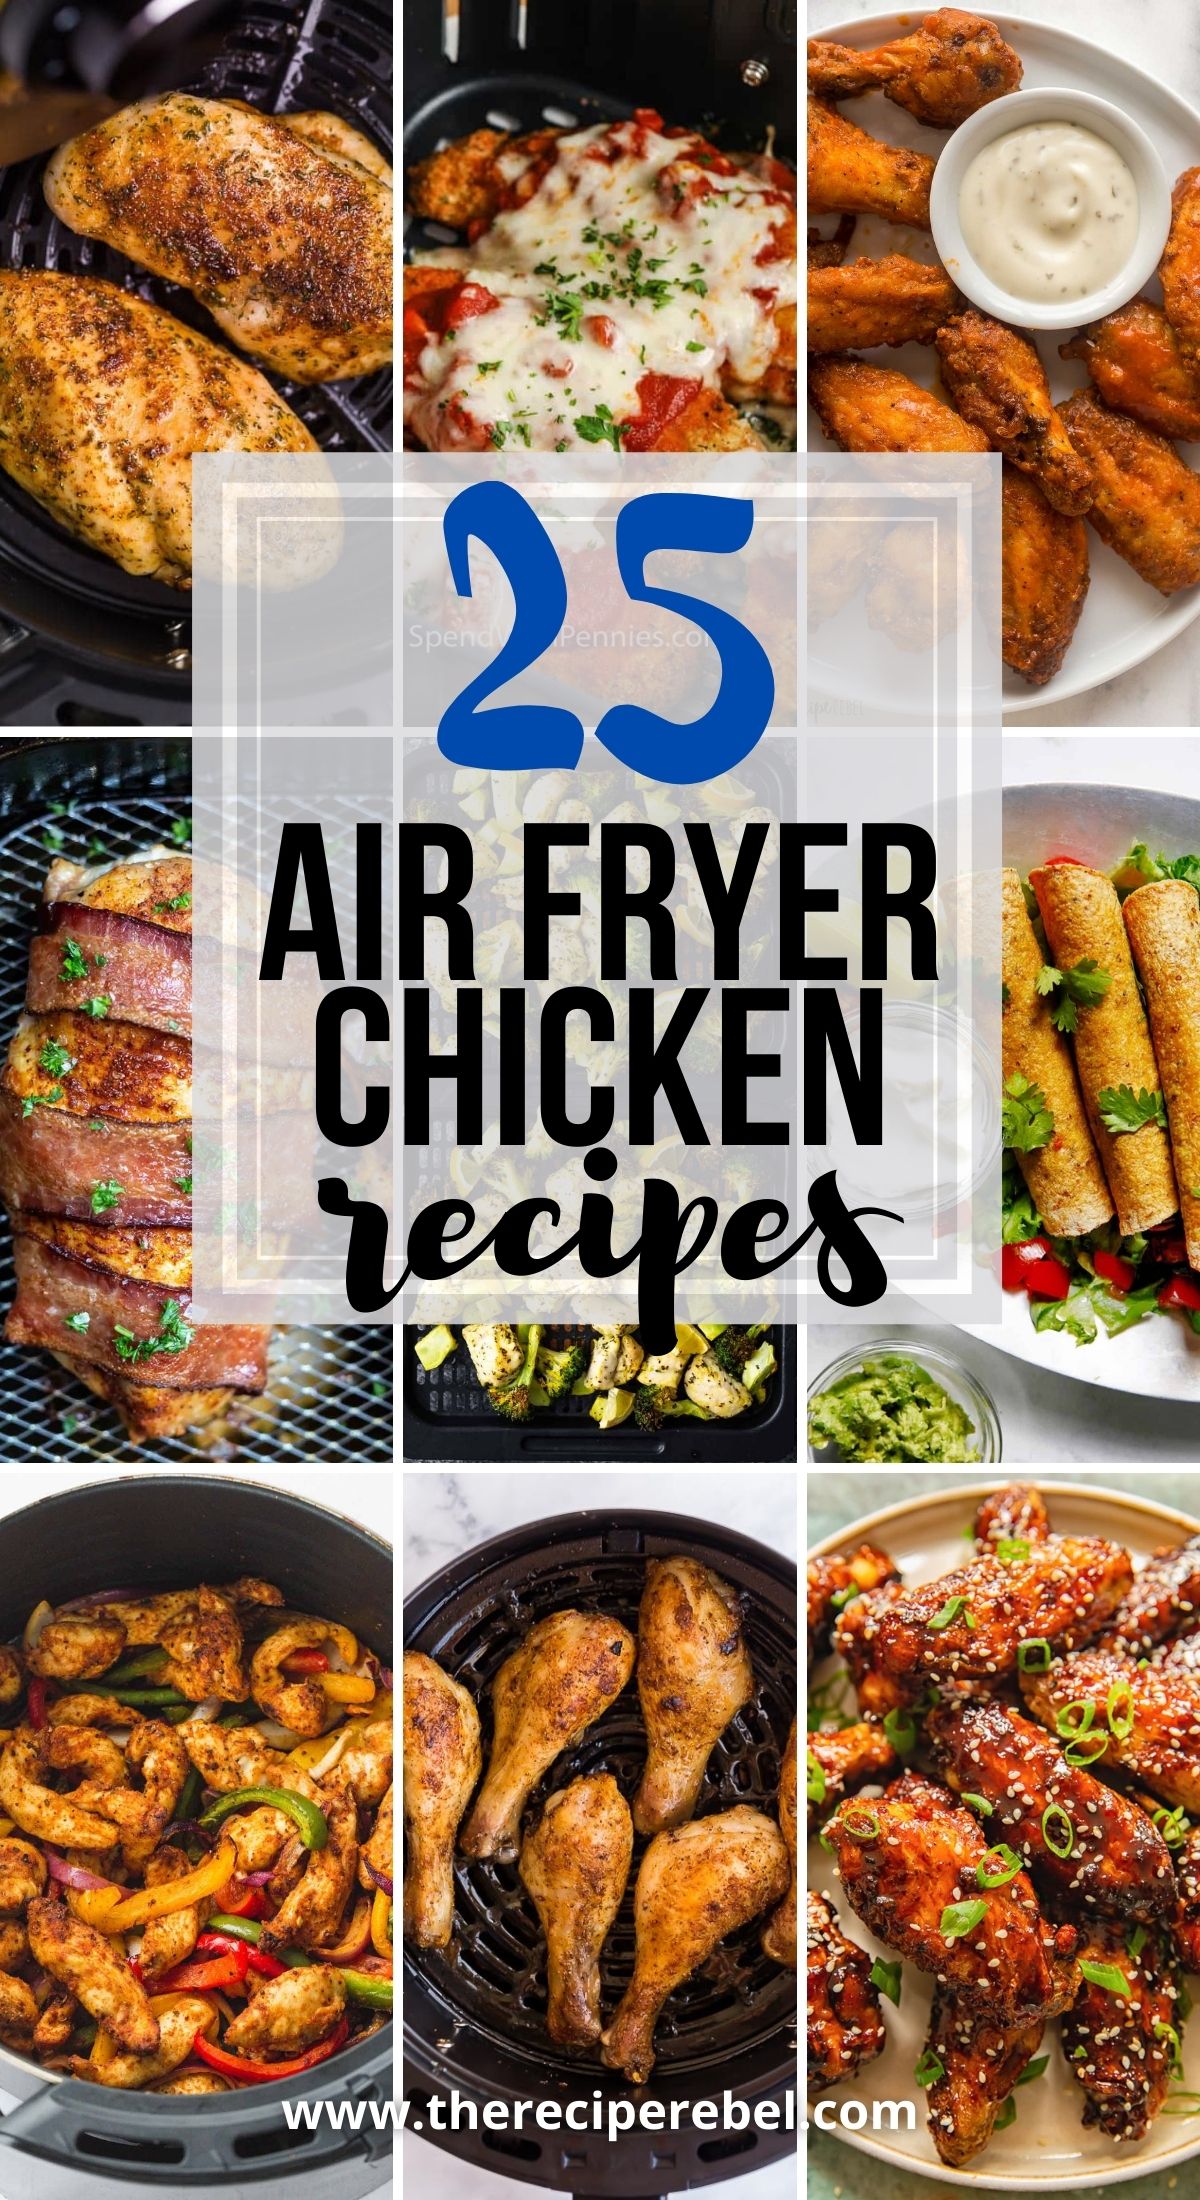 https://www.thereciperebel.com/wp-content/uploads/2021/12/air-fryer-chicken-recipes-2.jpg